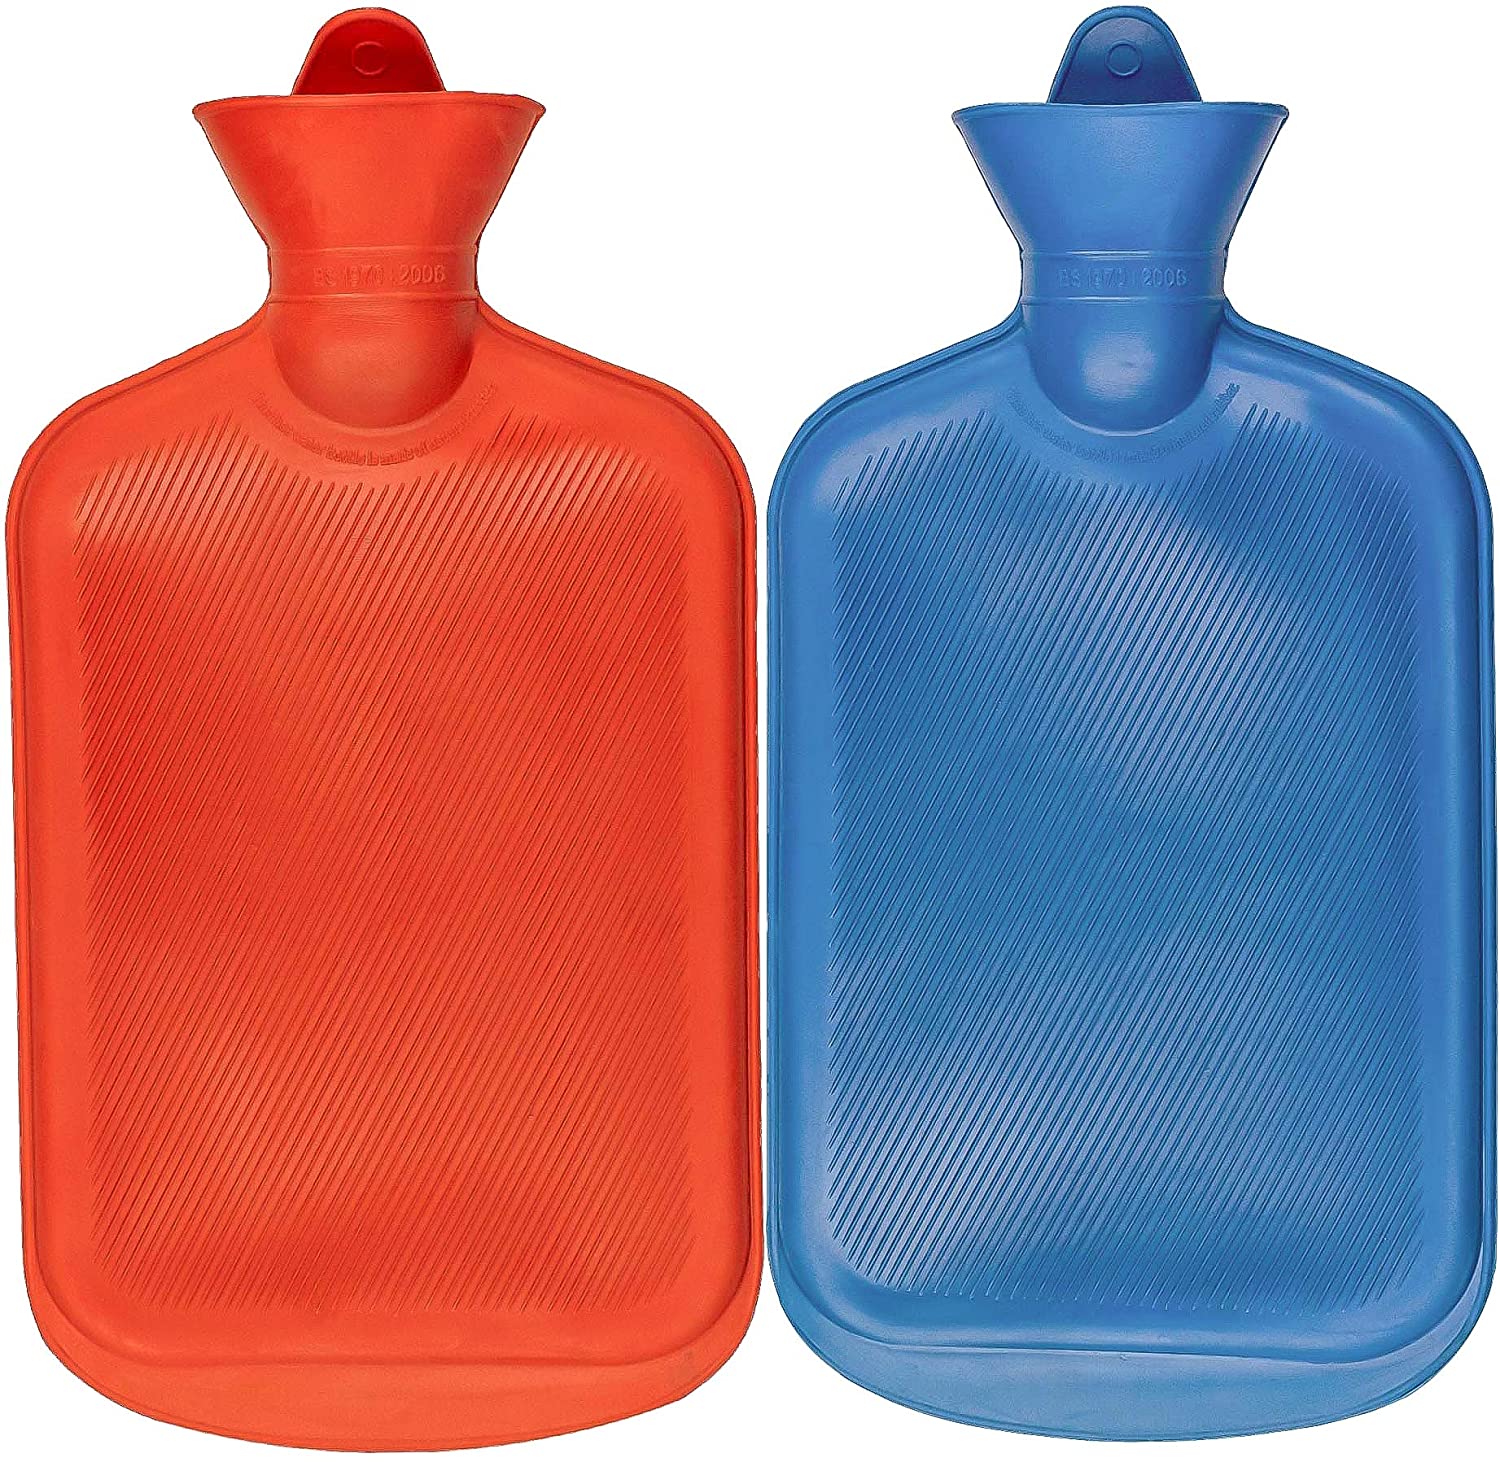 Bolsa de agua caliente de goma duradera para compresas calientes y terapia de calor